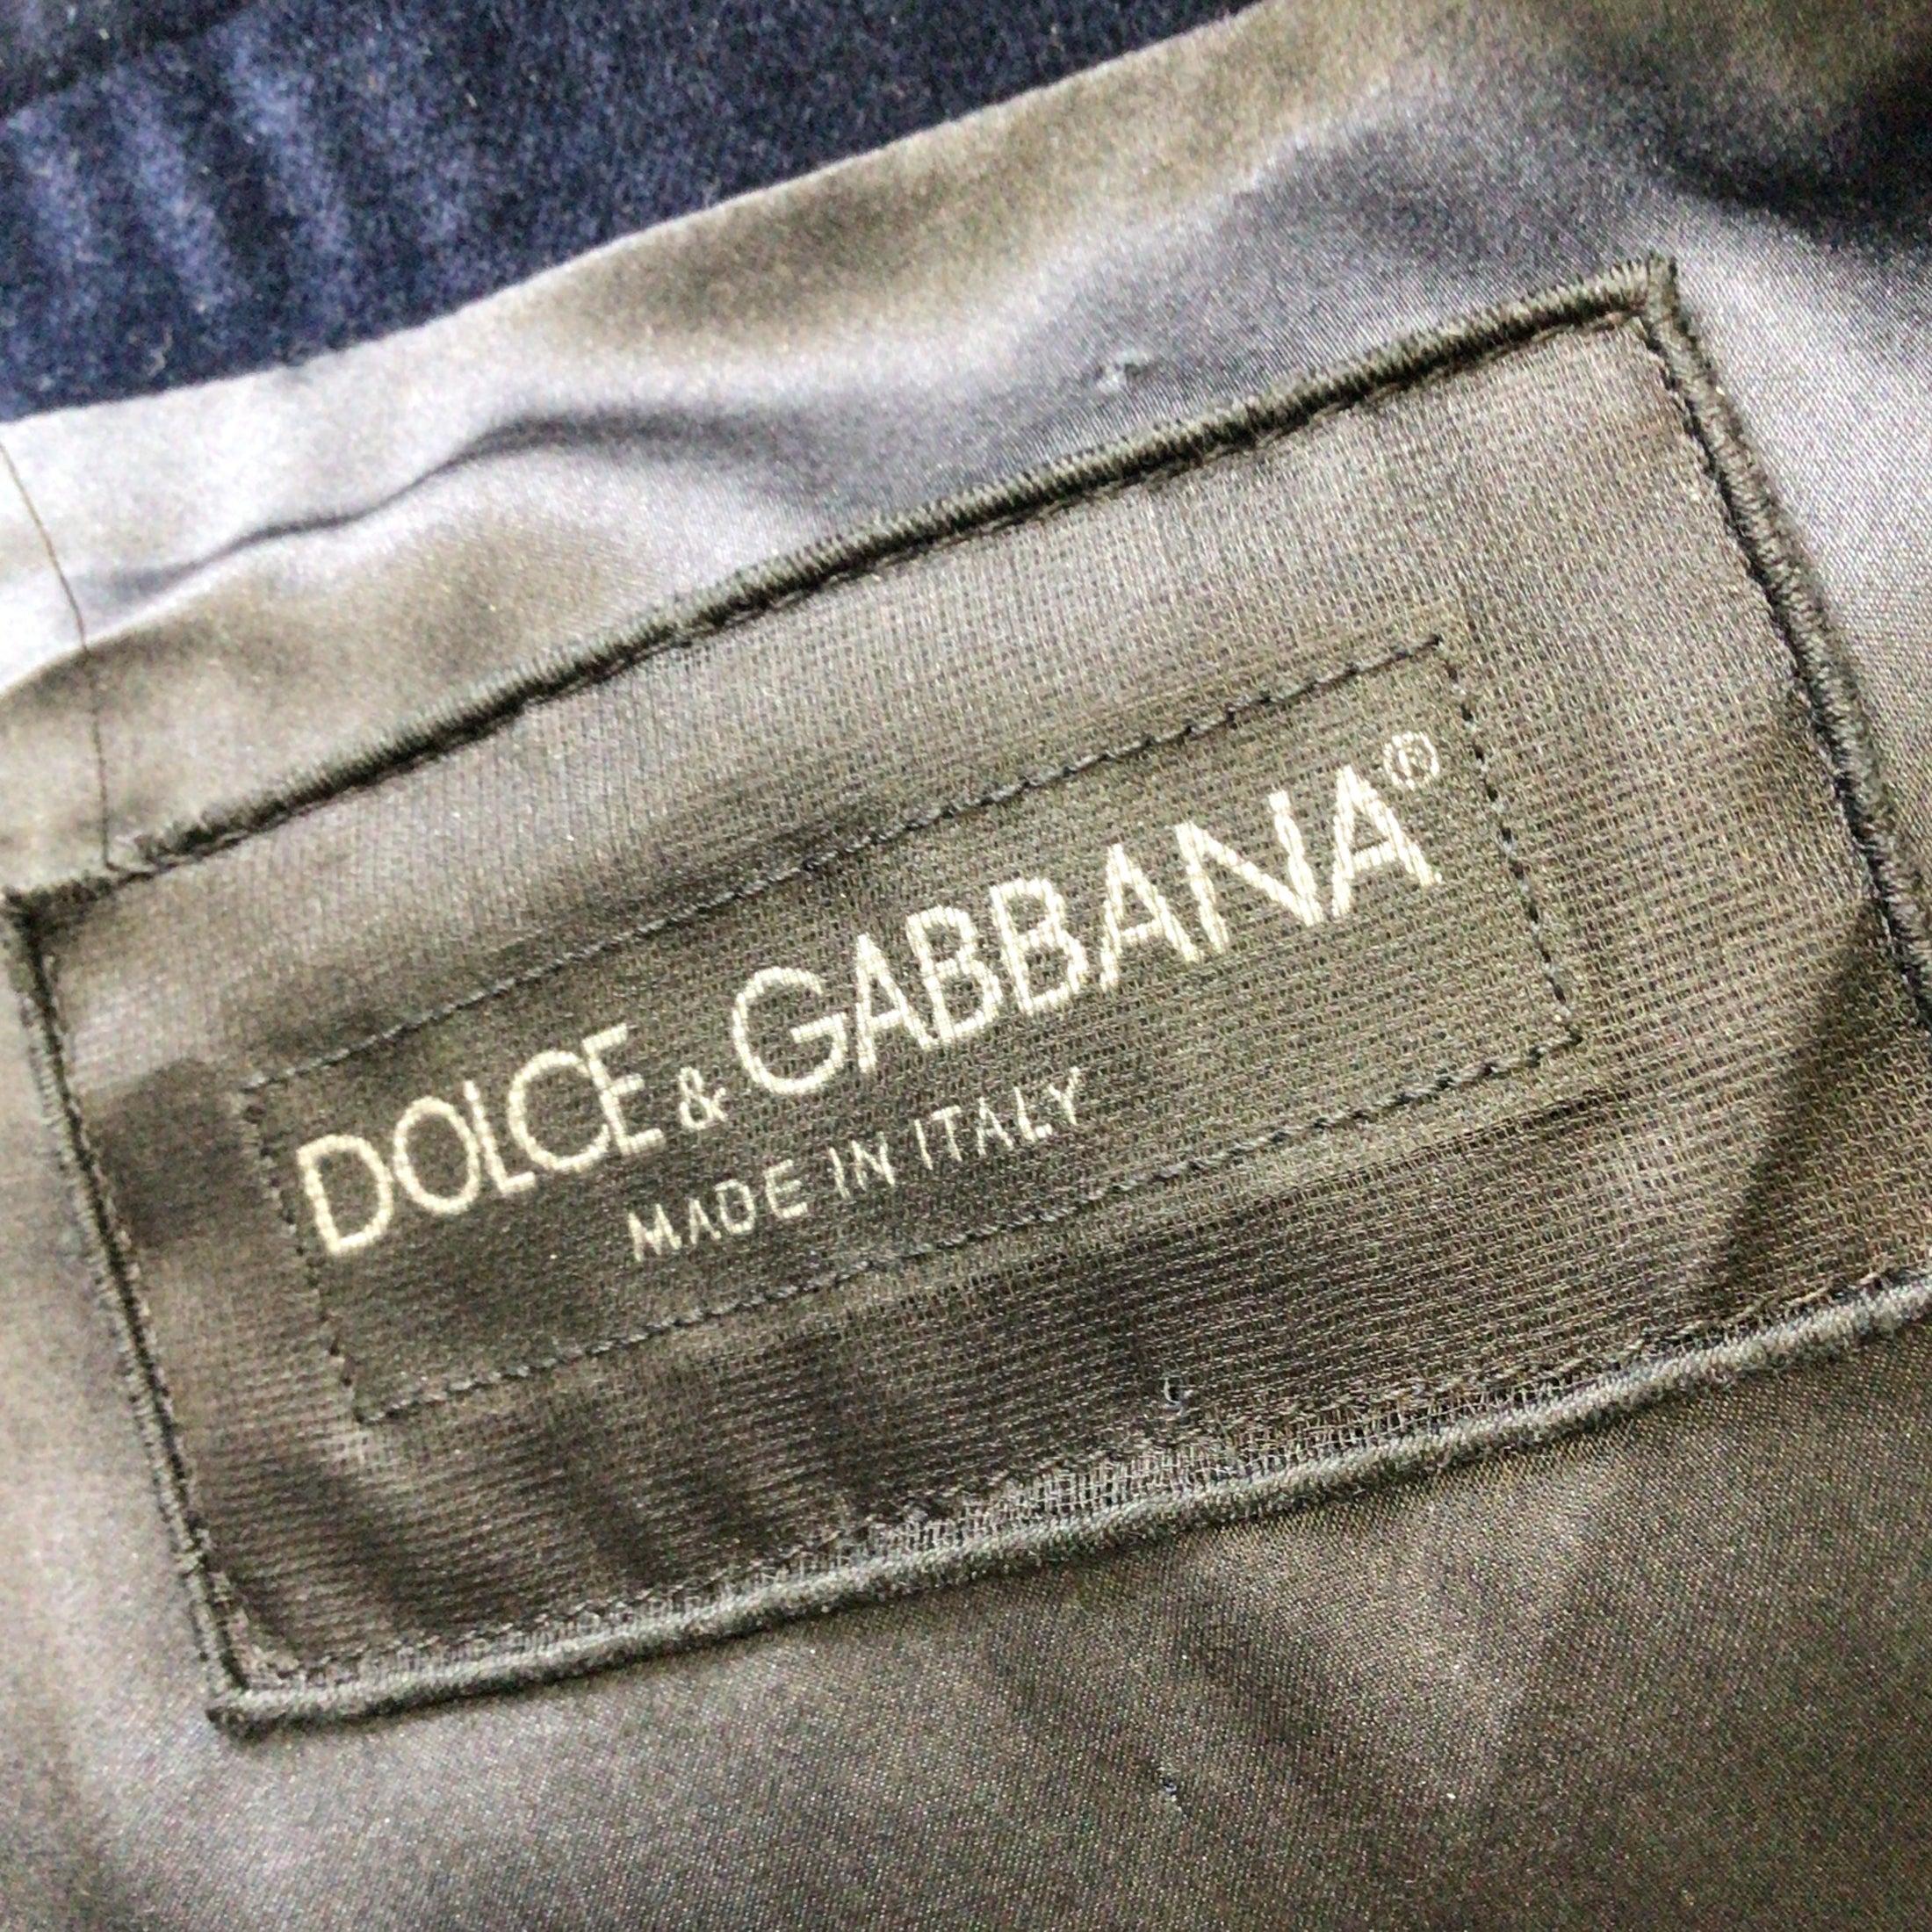 Dolce & Gabbana Navy Blue One-Button Tuxedo-Style Velvet Blazer